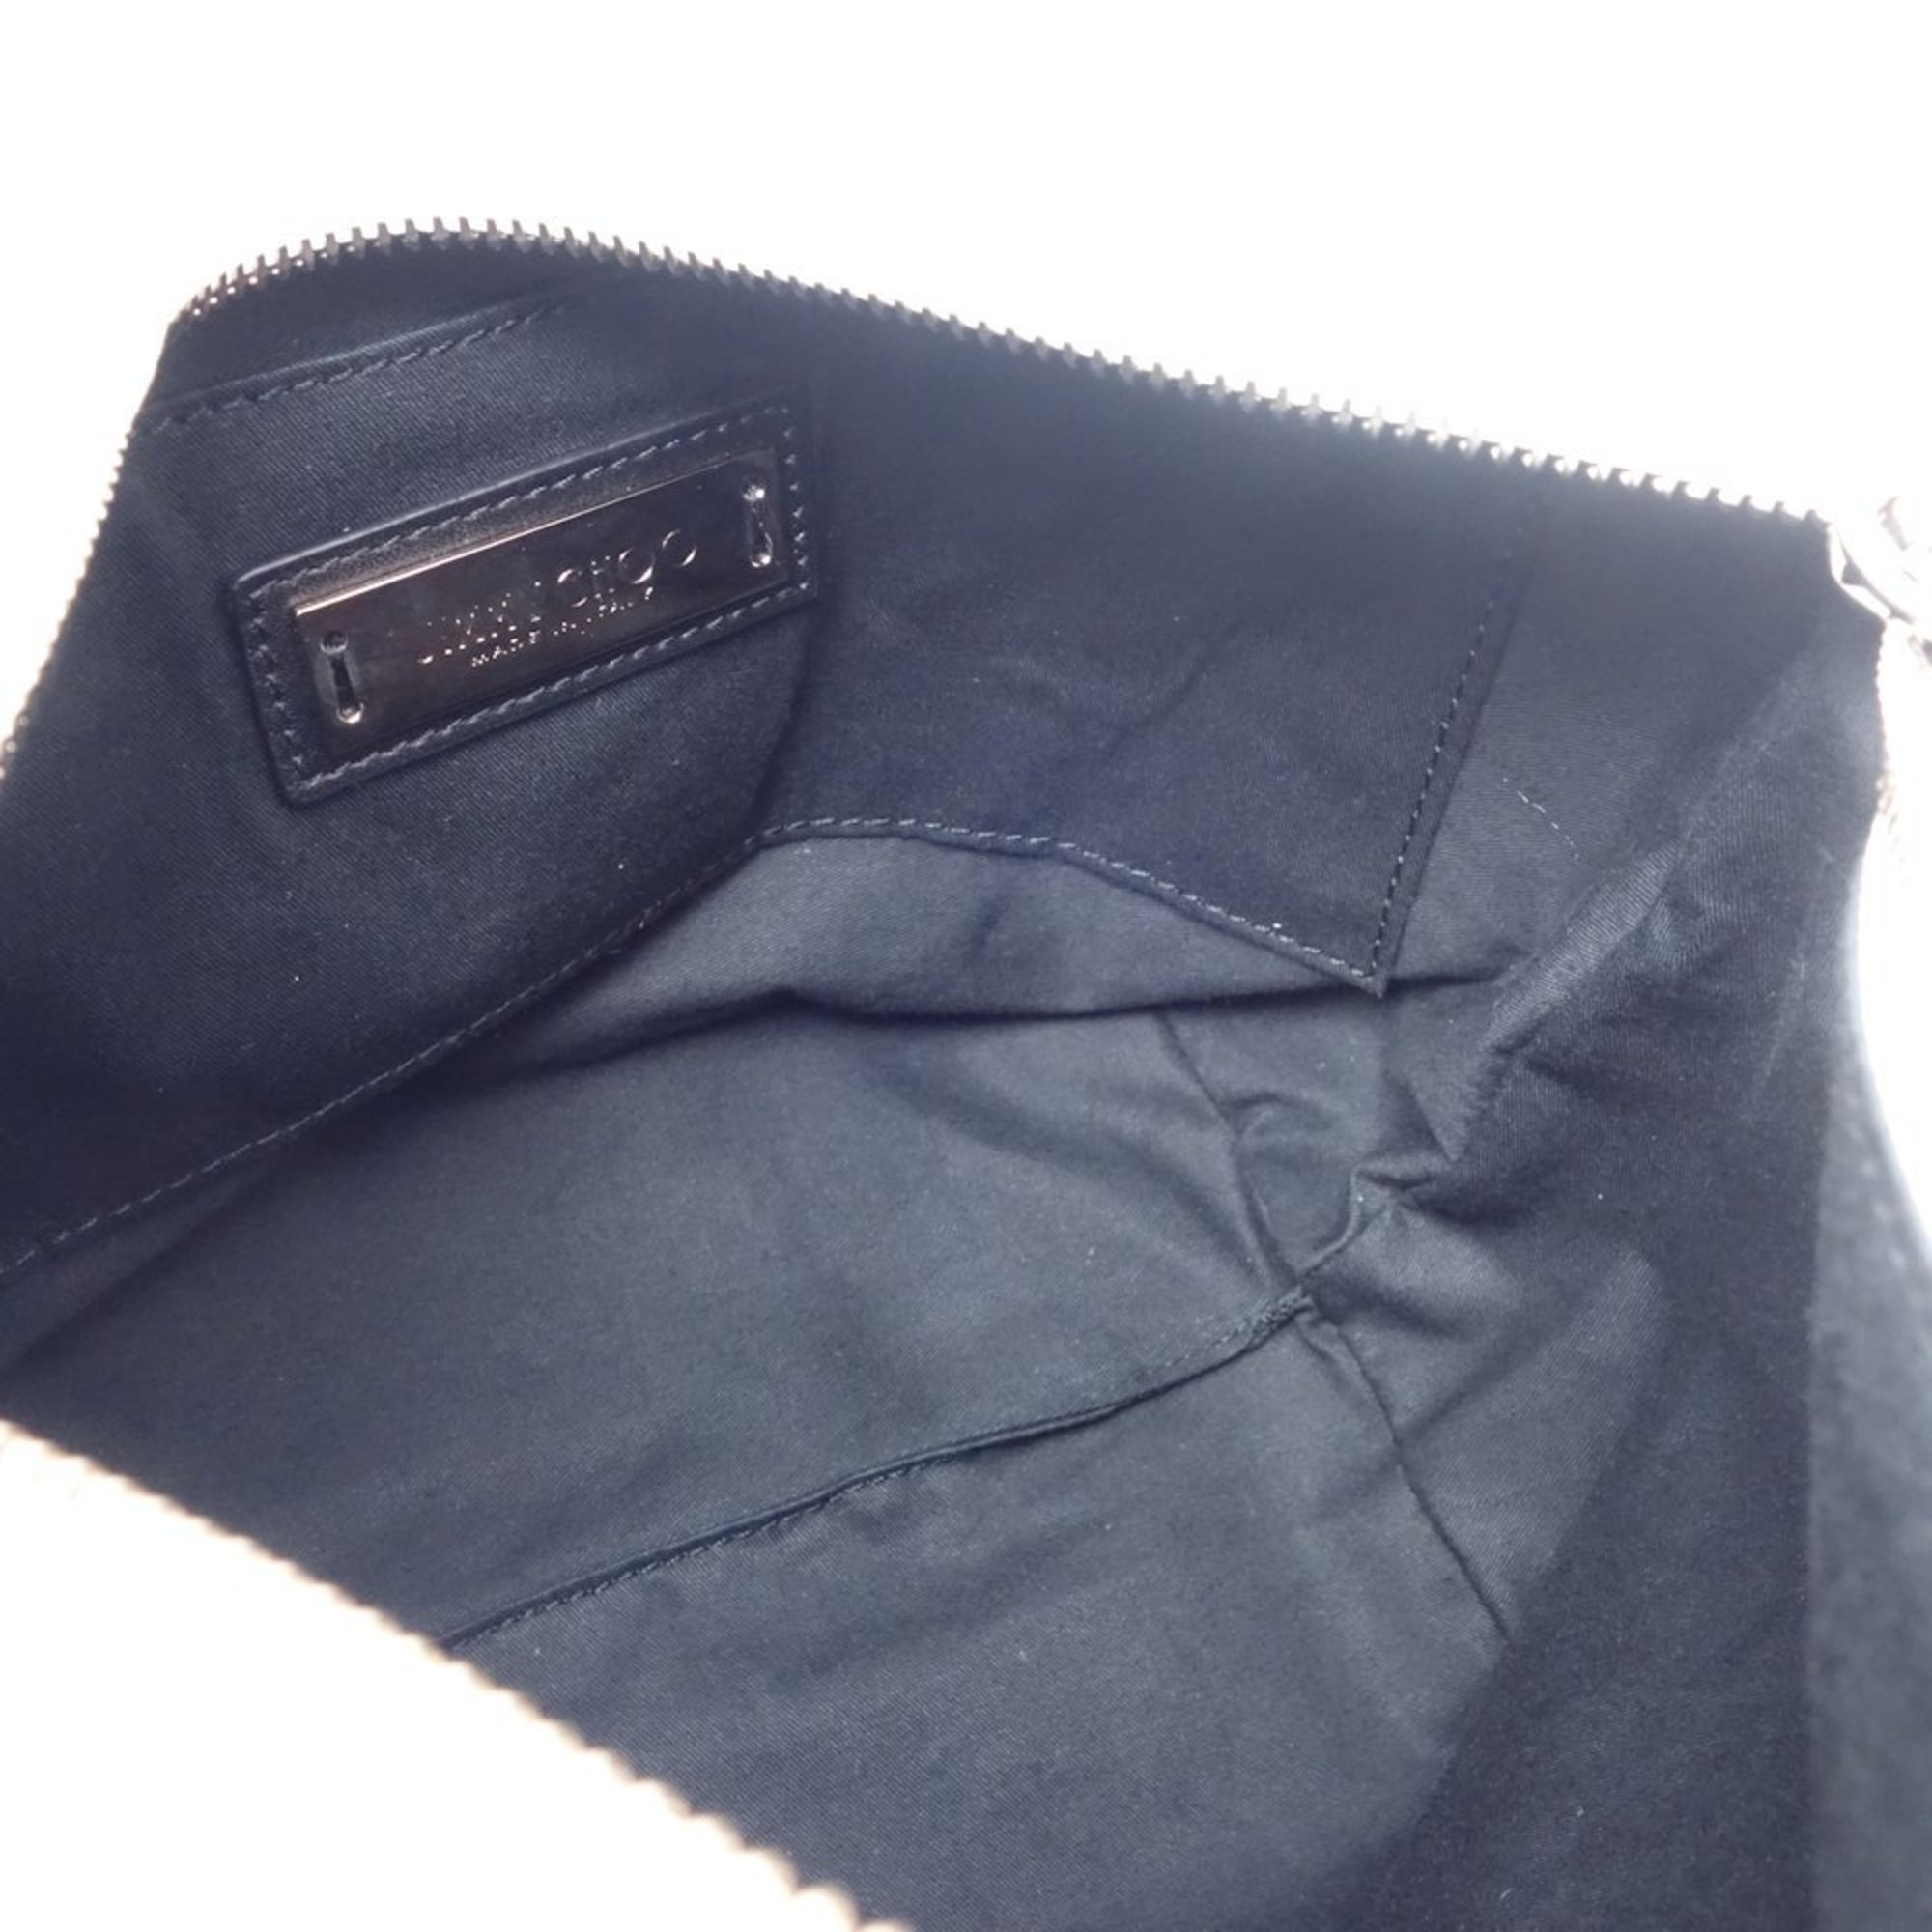 Jimmy Choo Embossed Star Mini Sara Handbag Leather White Black 450051